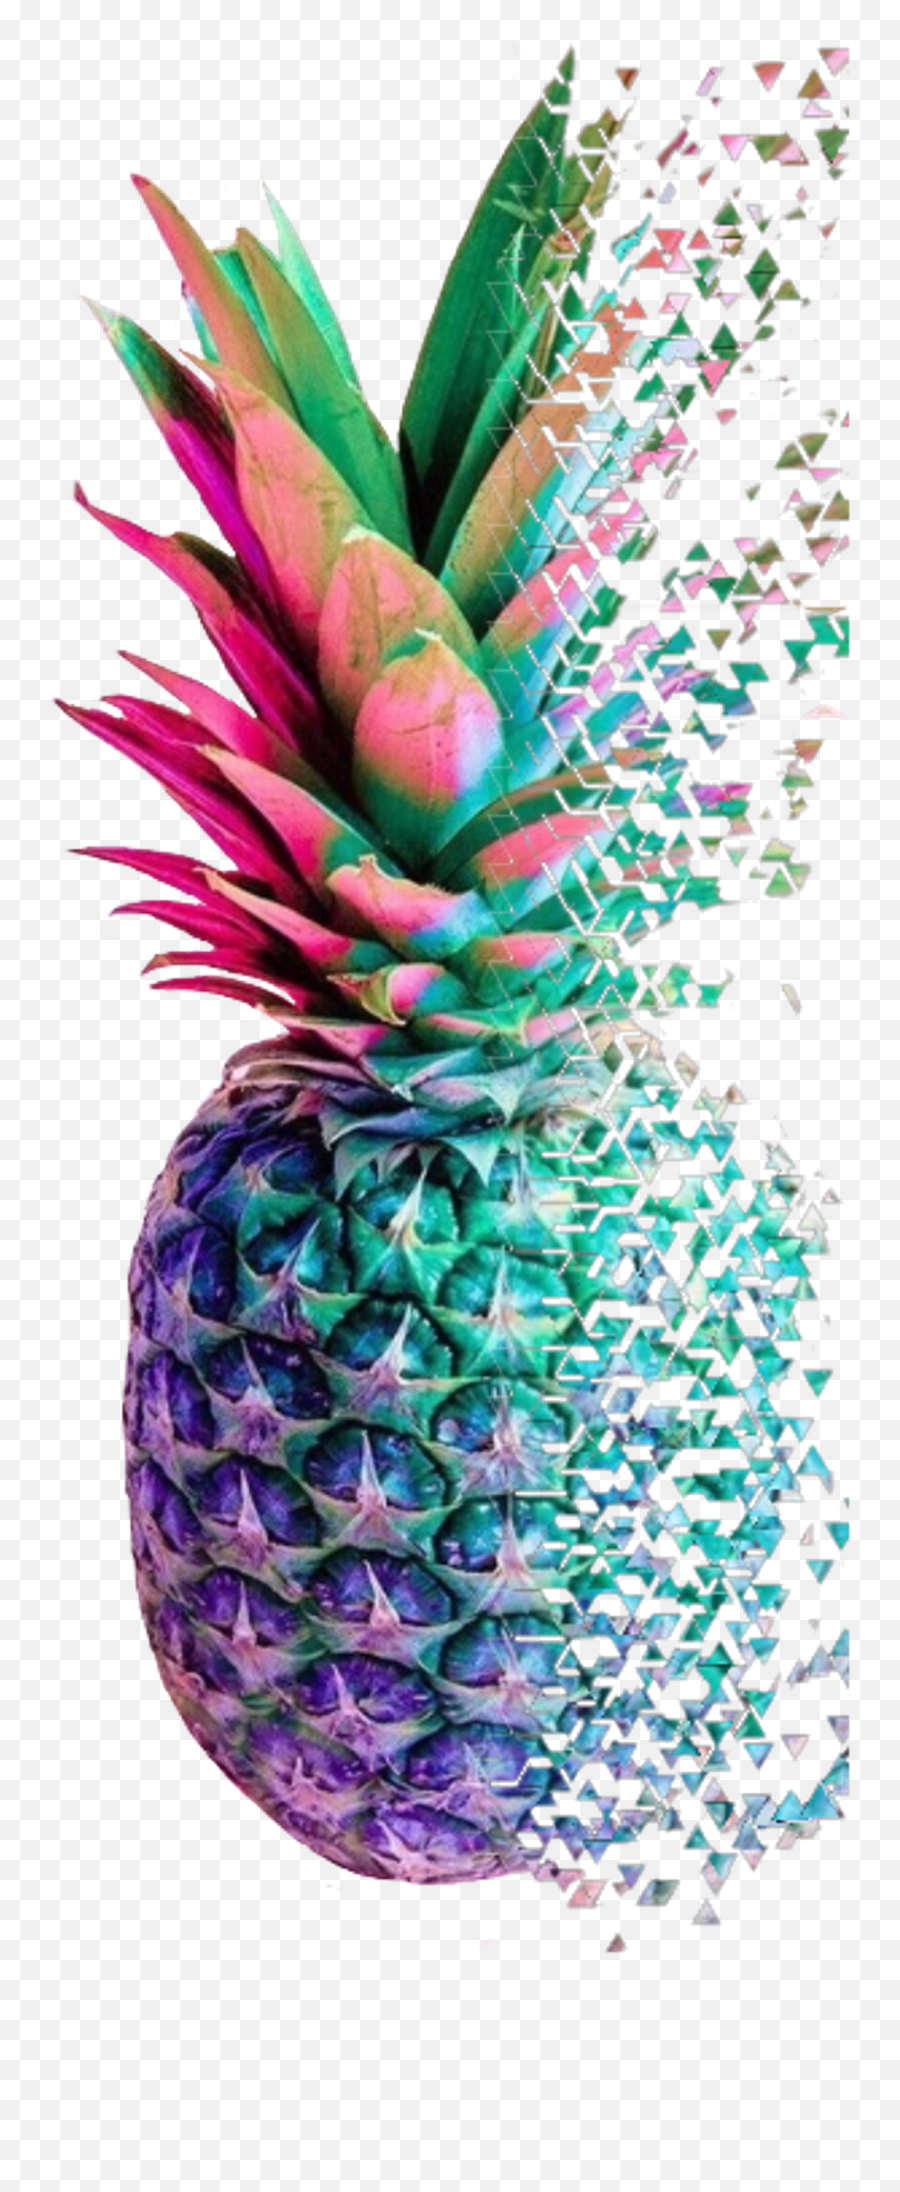 Magic Pineapple Png Image With No Emoji,Pineapple Png Tumblr